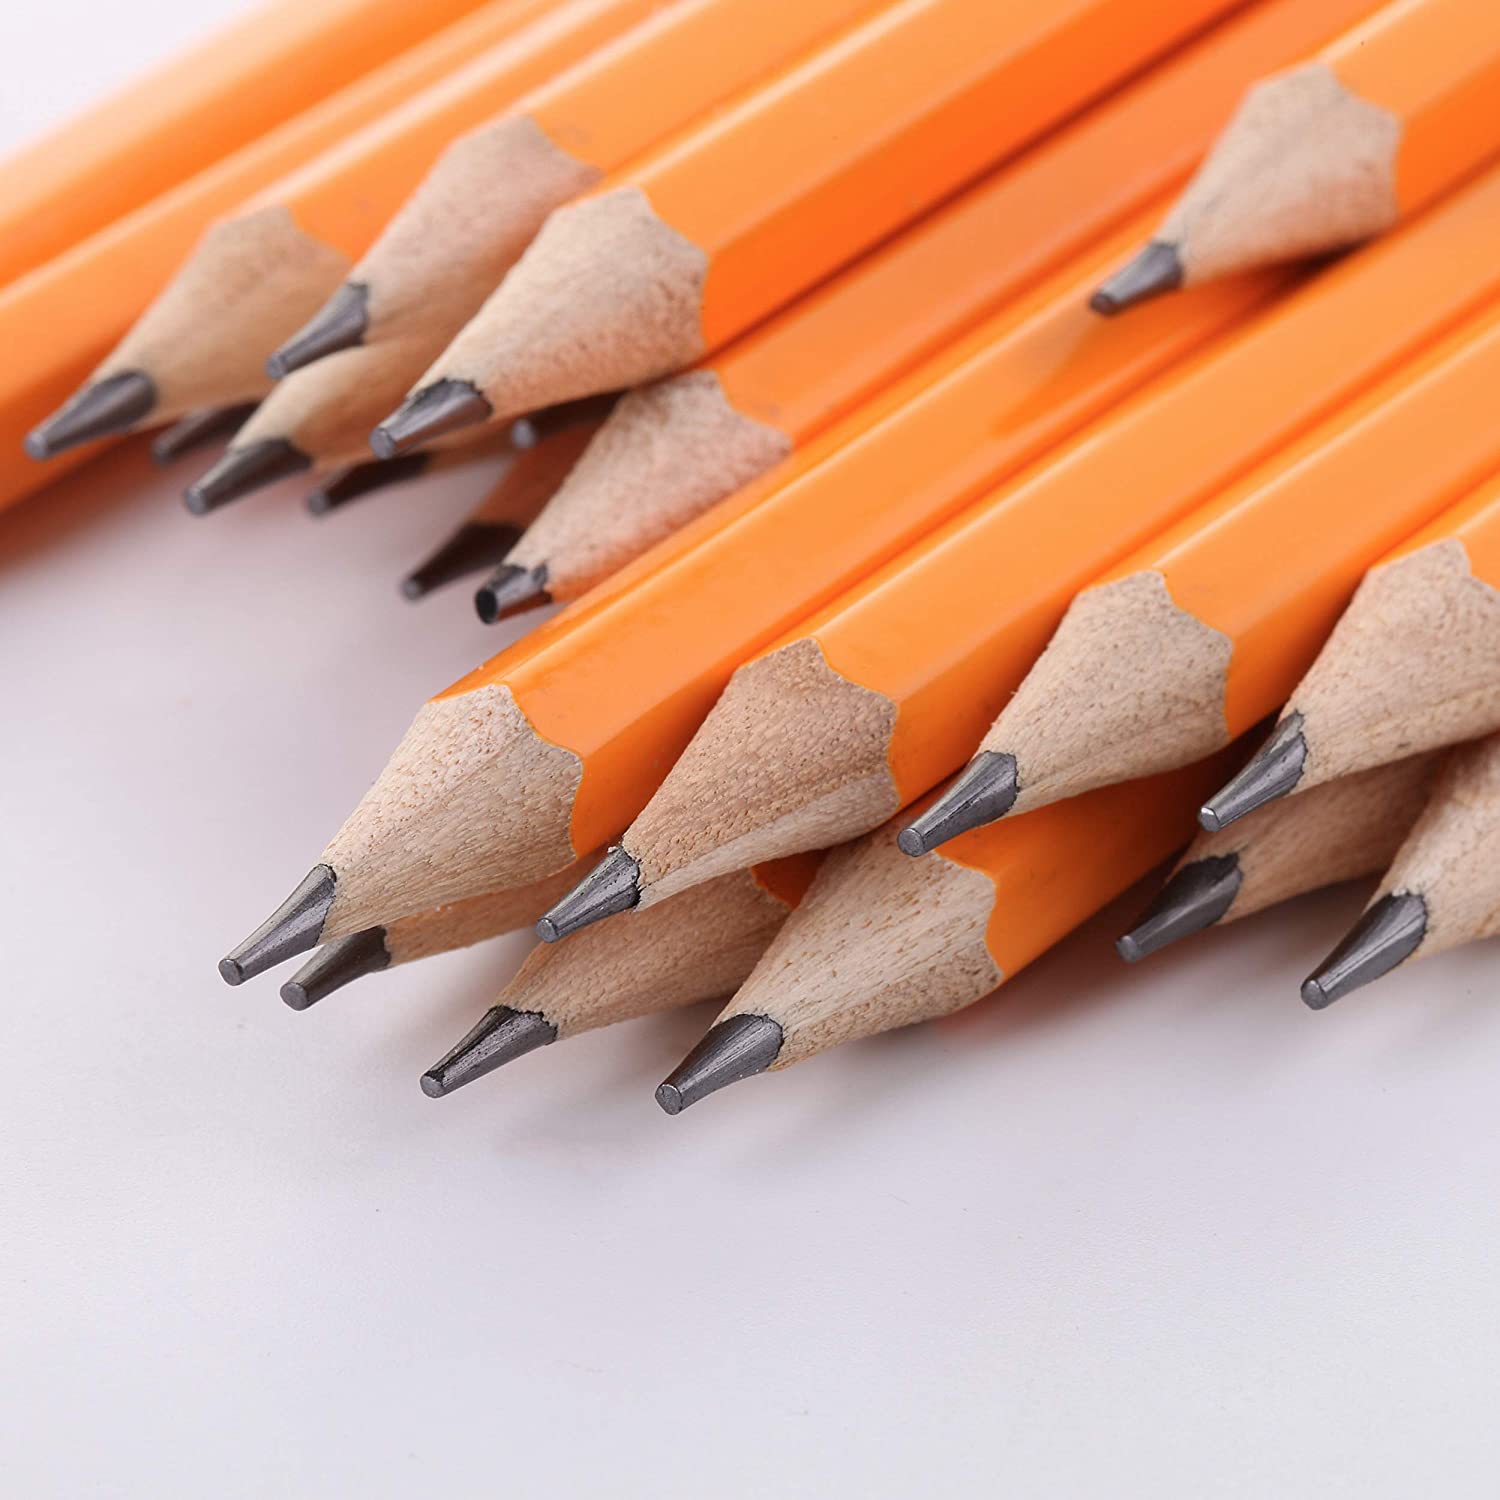 Pencils with Sharpener and Eraser, 24 Pencils, 2 Metal Pencil Sharpeners, 2 Erasers, Pencils and Sharpener, Pencil and Sharpener Set, School Supplies, Pencil with Sharpener, Erasers for Kids